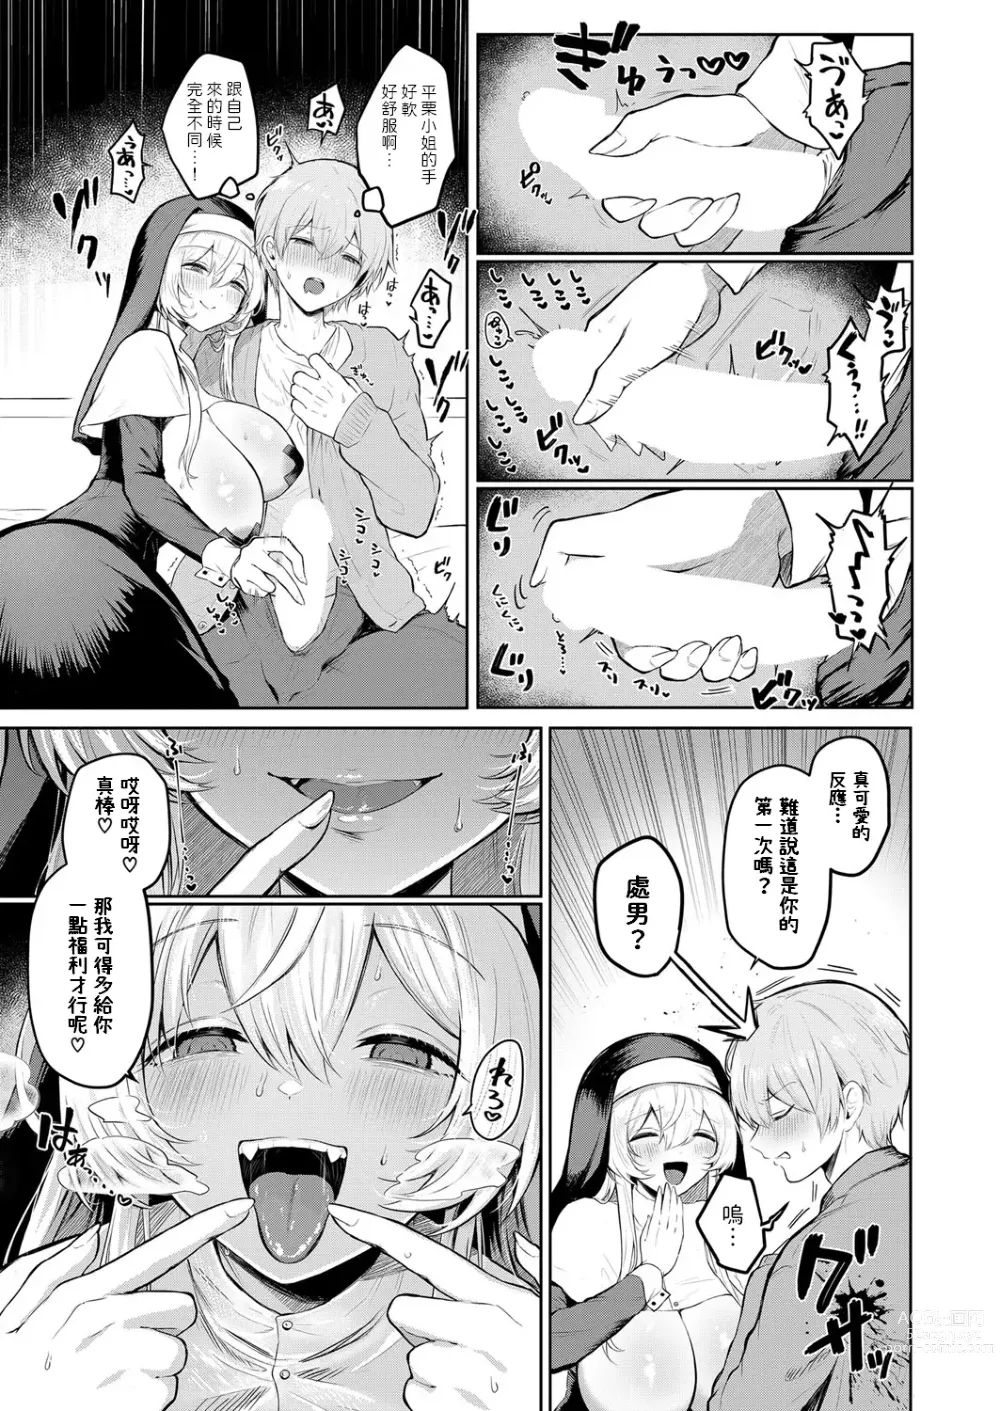 Page 9 of manga Nukumori Fukushikai Chinpopo